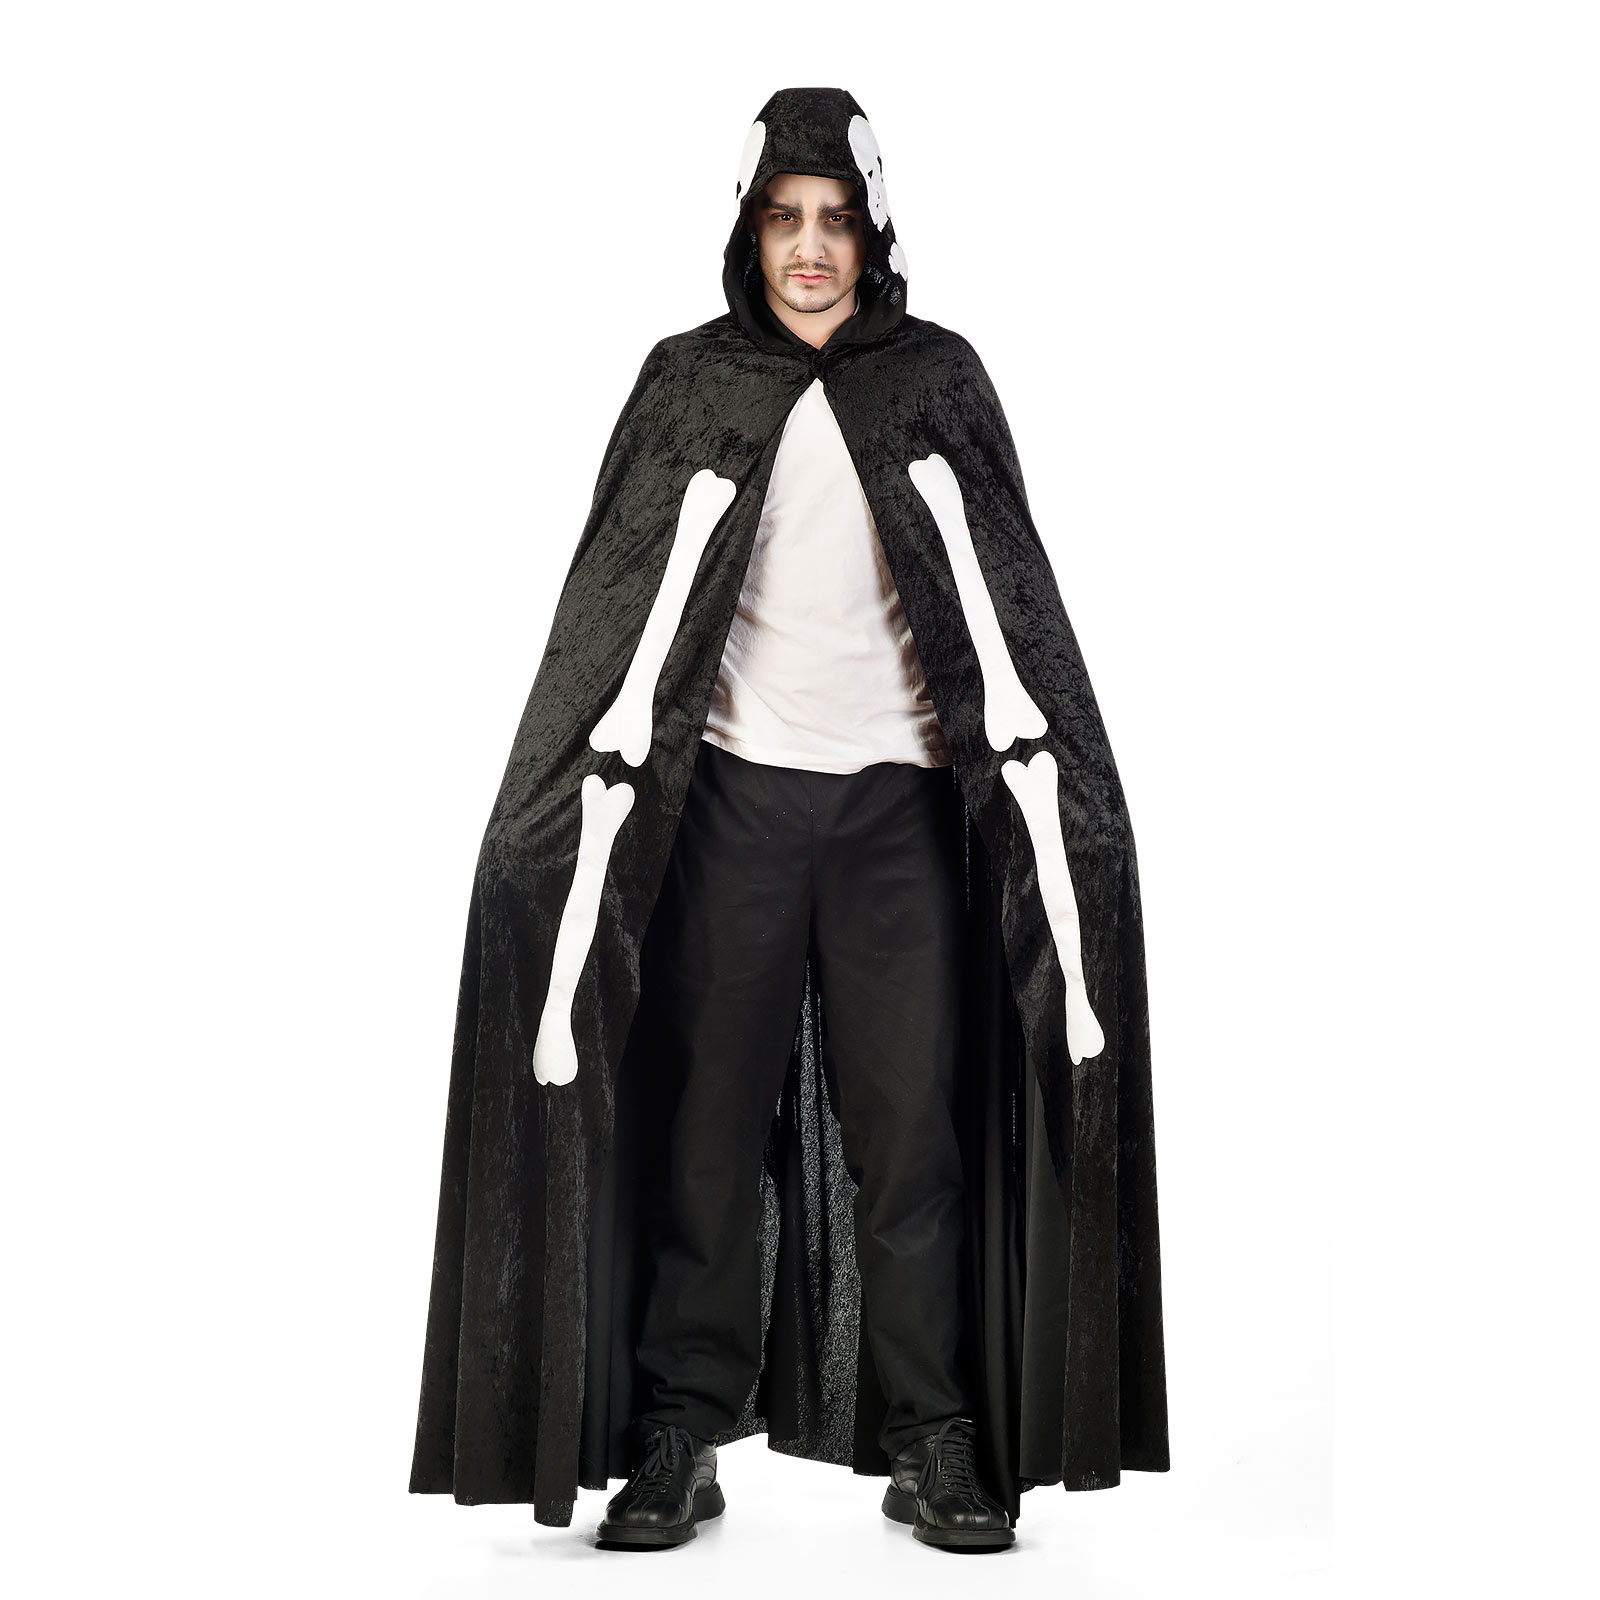 Skeleton Cape - Long Costume Cloak